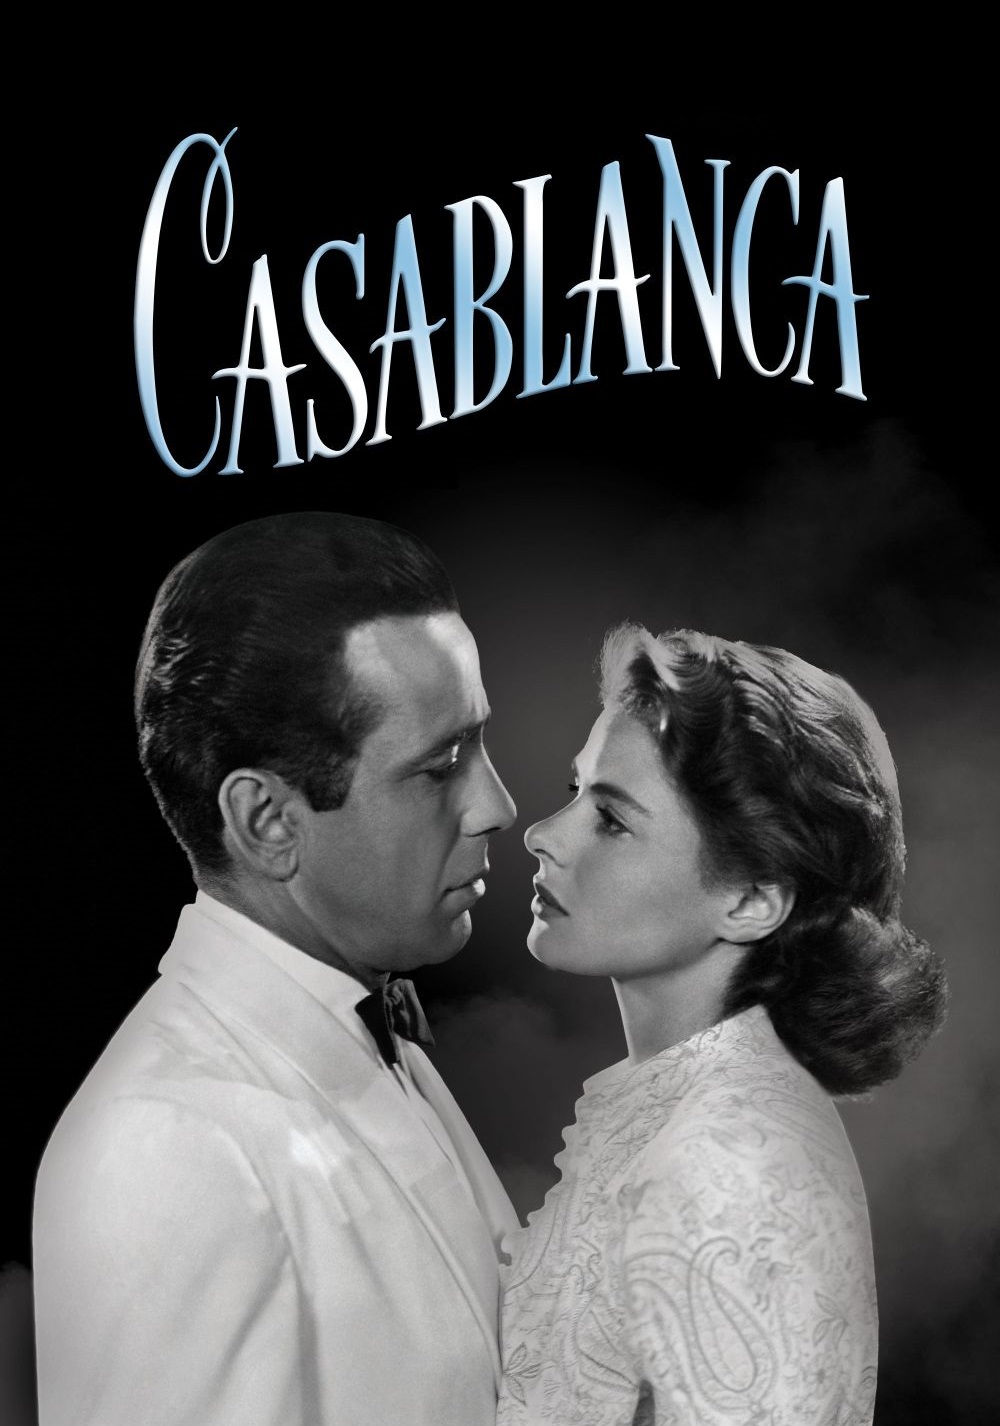 Poster Casablanca